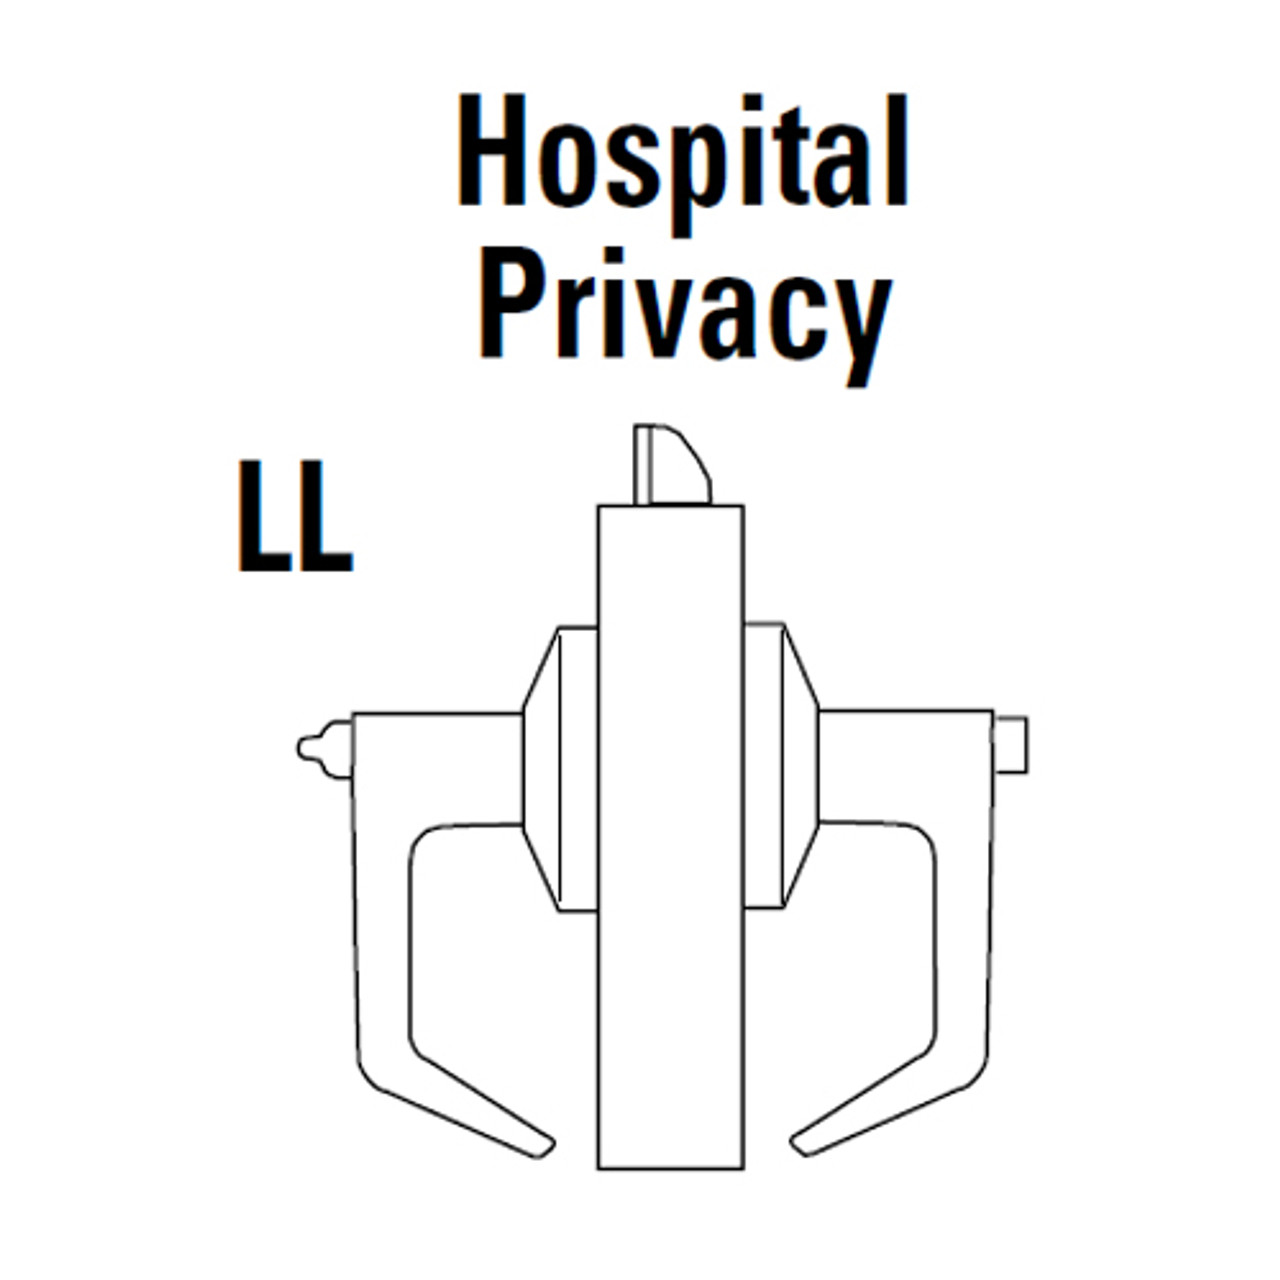 9K30LL14DSTK626 Best 9K Series Hospital Privacy Heavy Duty Cylindrical Lever Locks in Satin Chrome